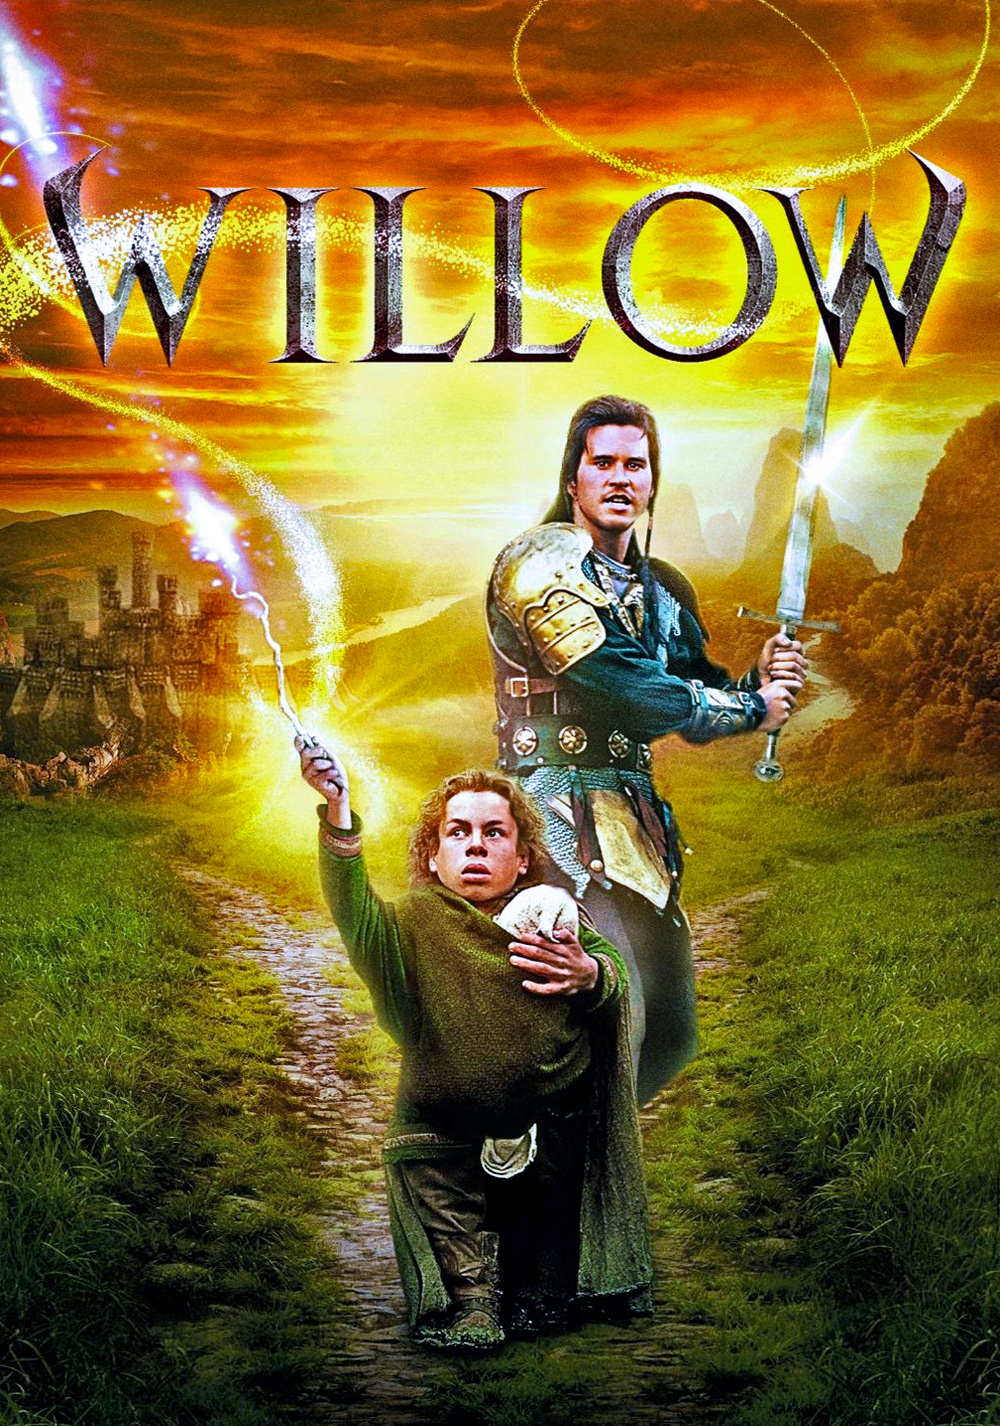 willow movie wallpaper